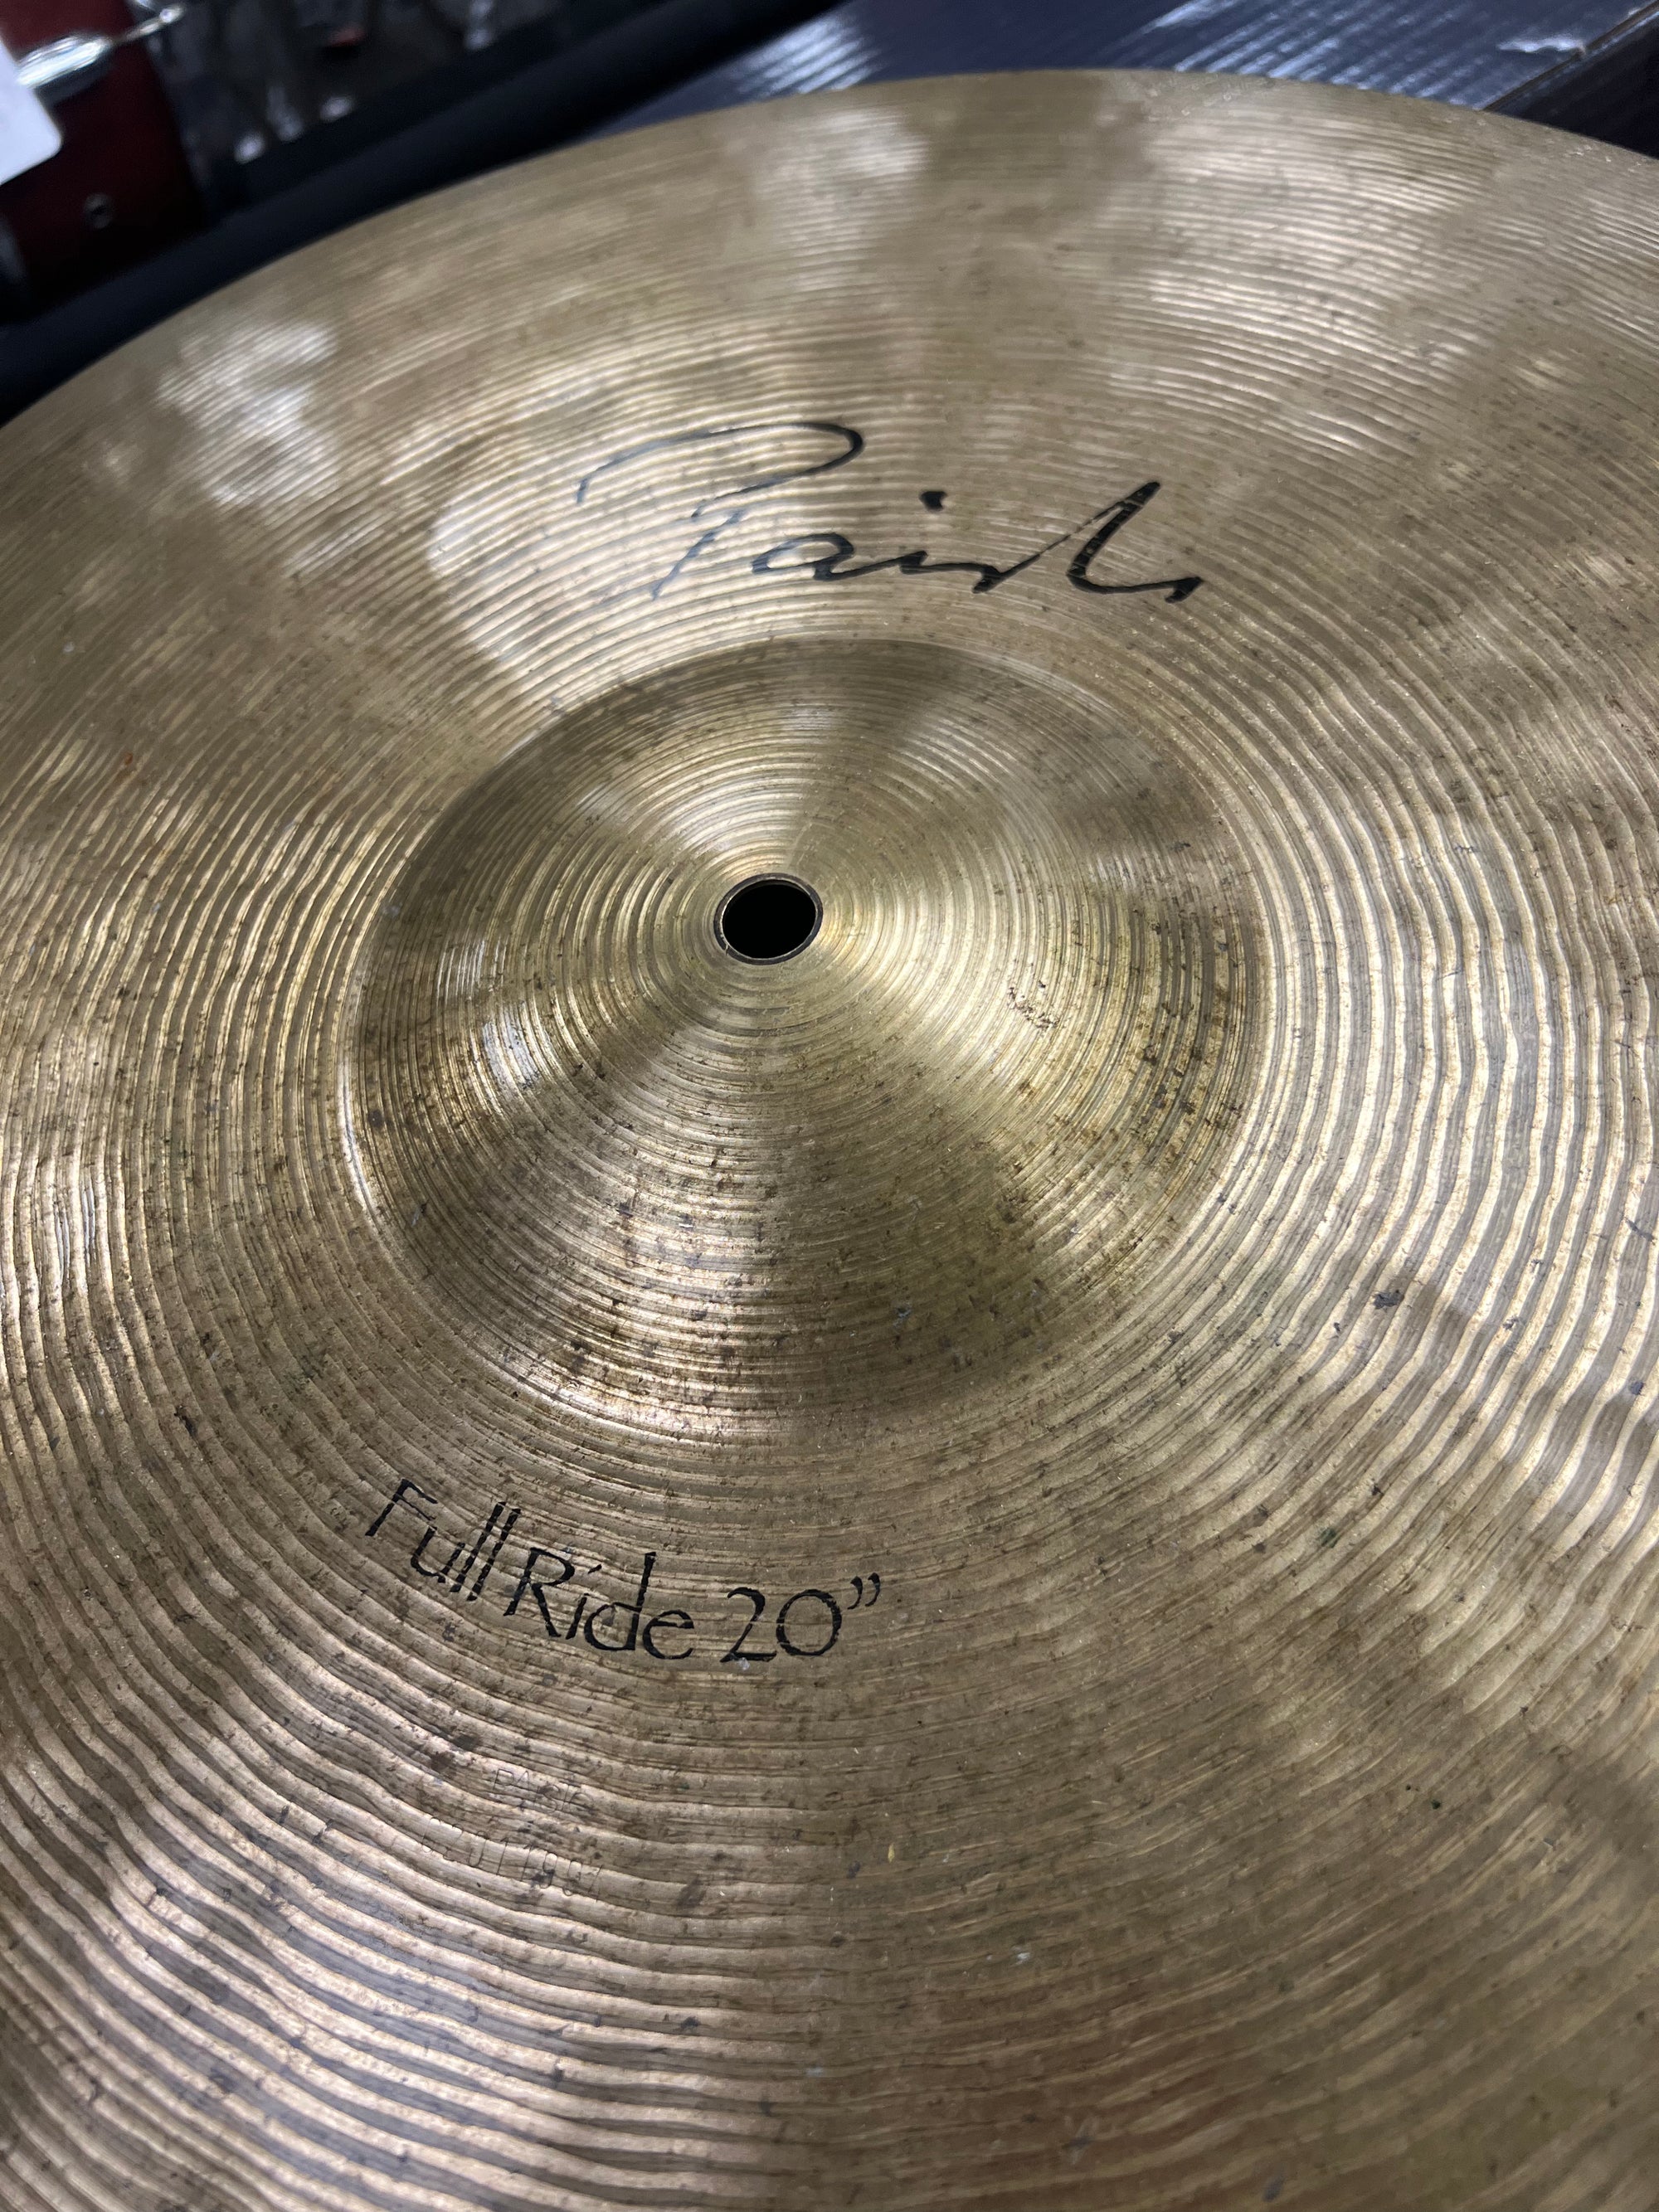 Paiste 20” Signature full ride Cymbal